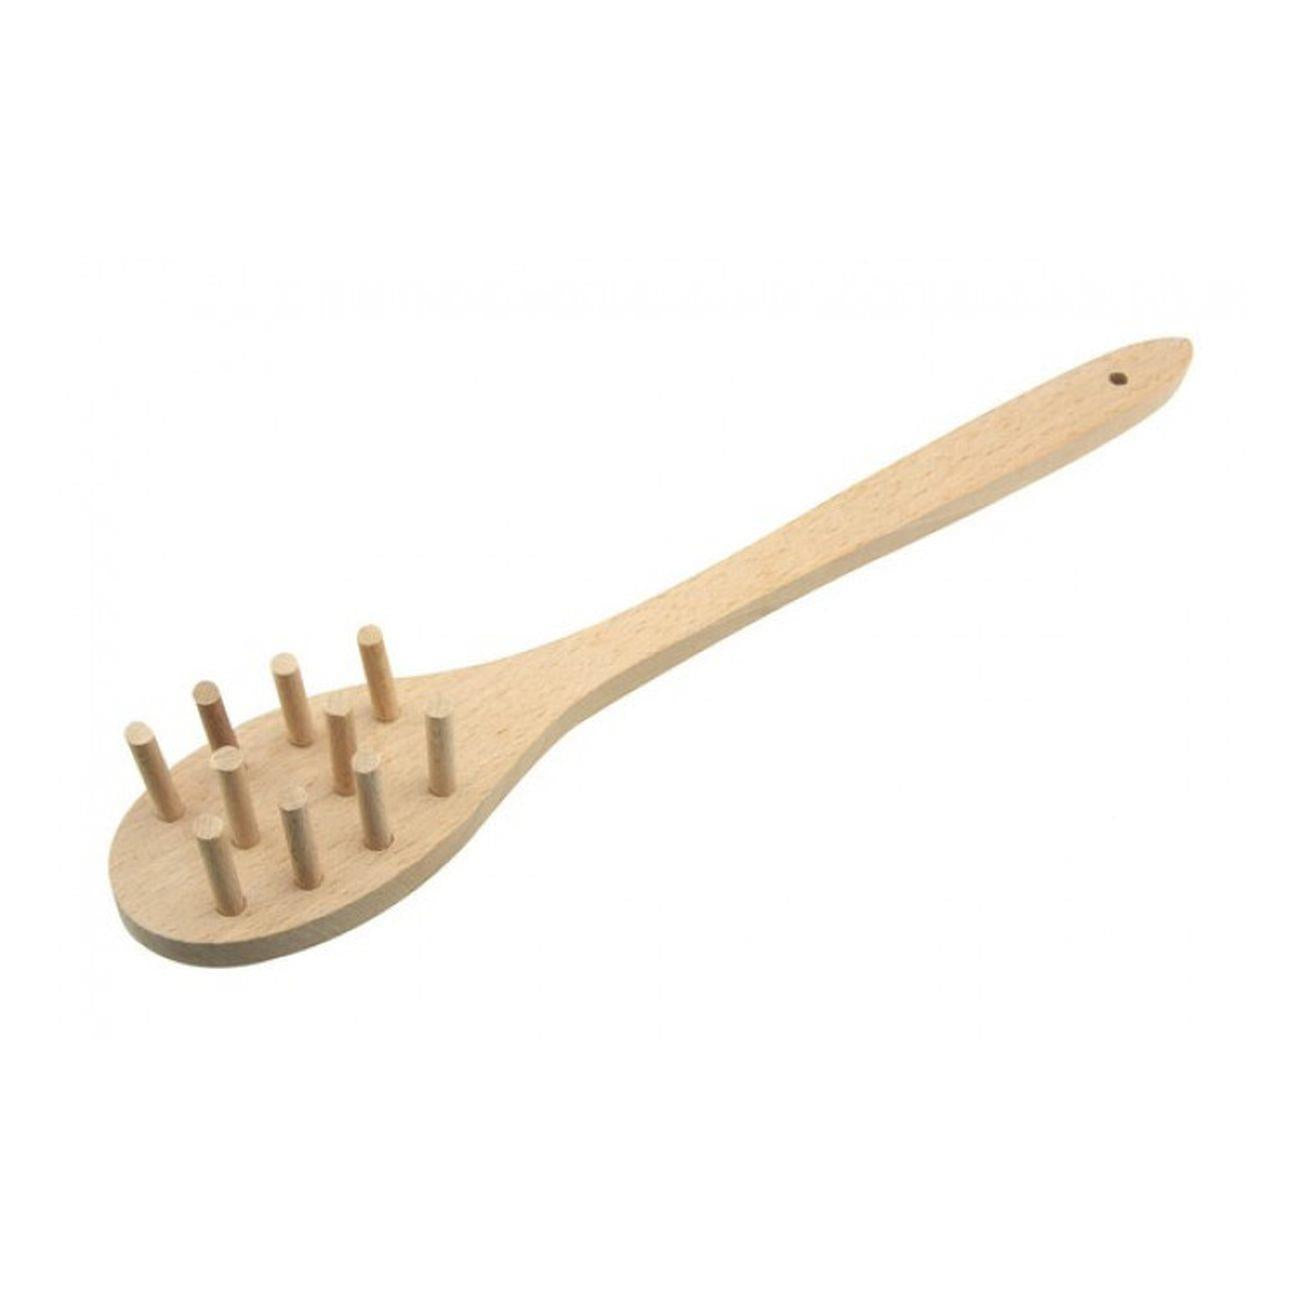 Wooden Spaghetti Spoon